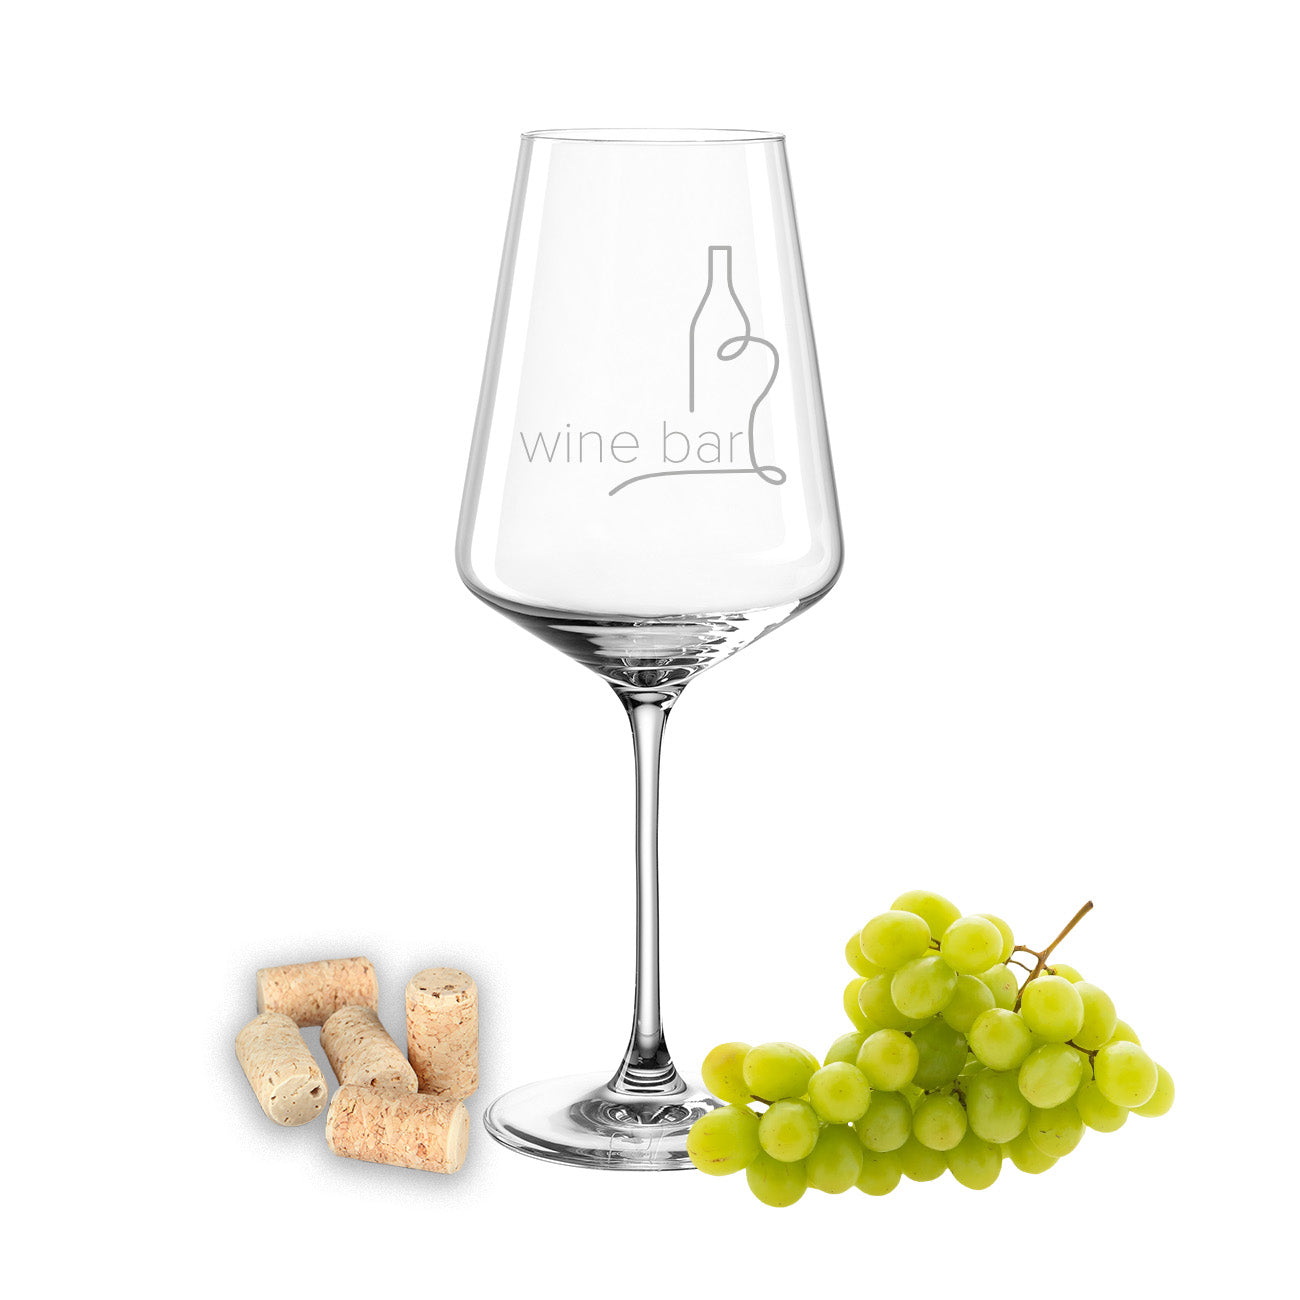 Weinglas mit Gravur Leonardo Puccini "WINE BAR"